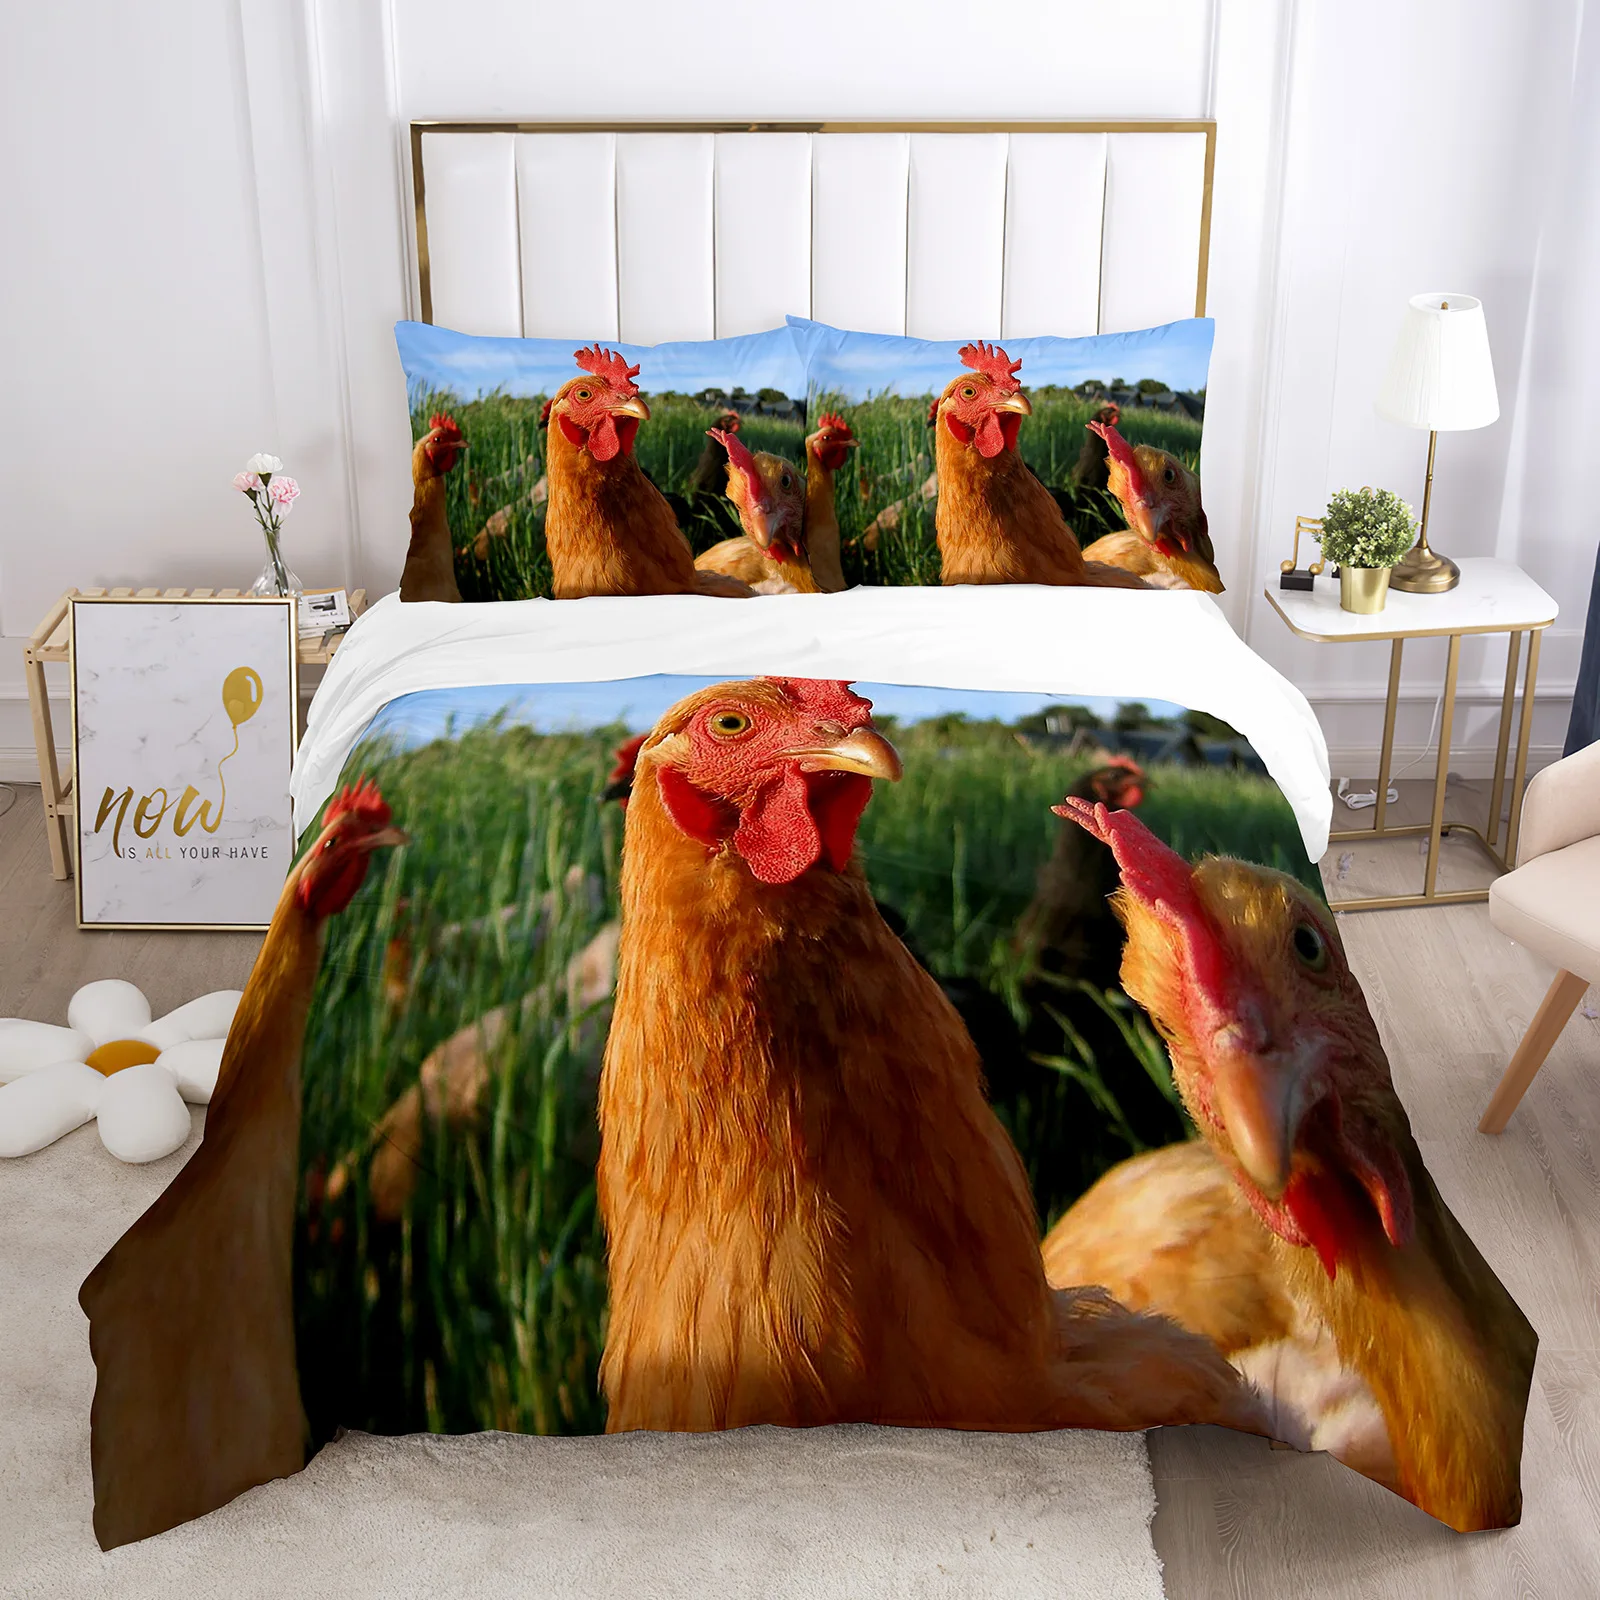 

Cool Animal Pattern Comforter Cover Funny Chicken Pattern Bedding Set Chicken Duvet Cover Set Microfiber Wildlife Quilt Cover